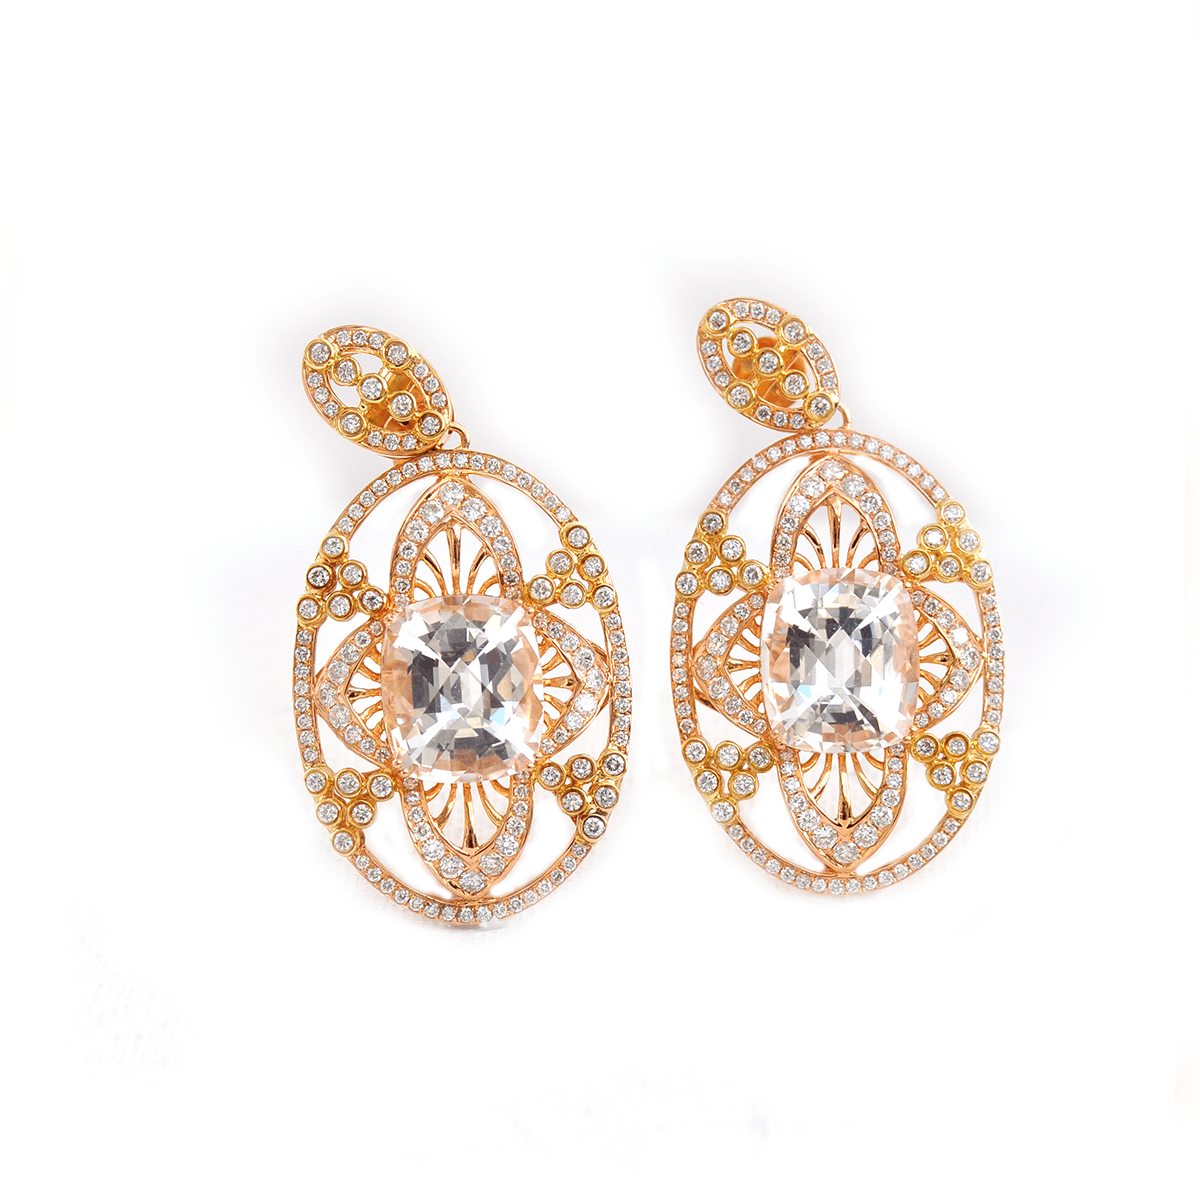 Crown Jewel Earrings -18 Karat Amber Hue Gold Diamond And White Topaz Earrings